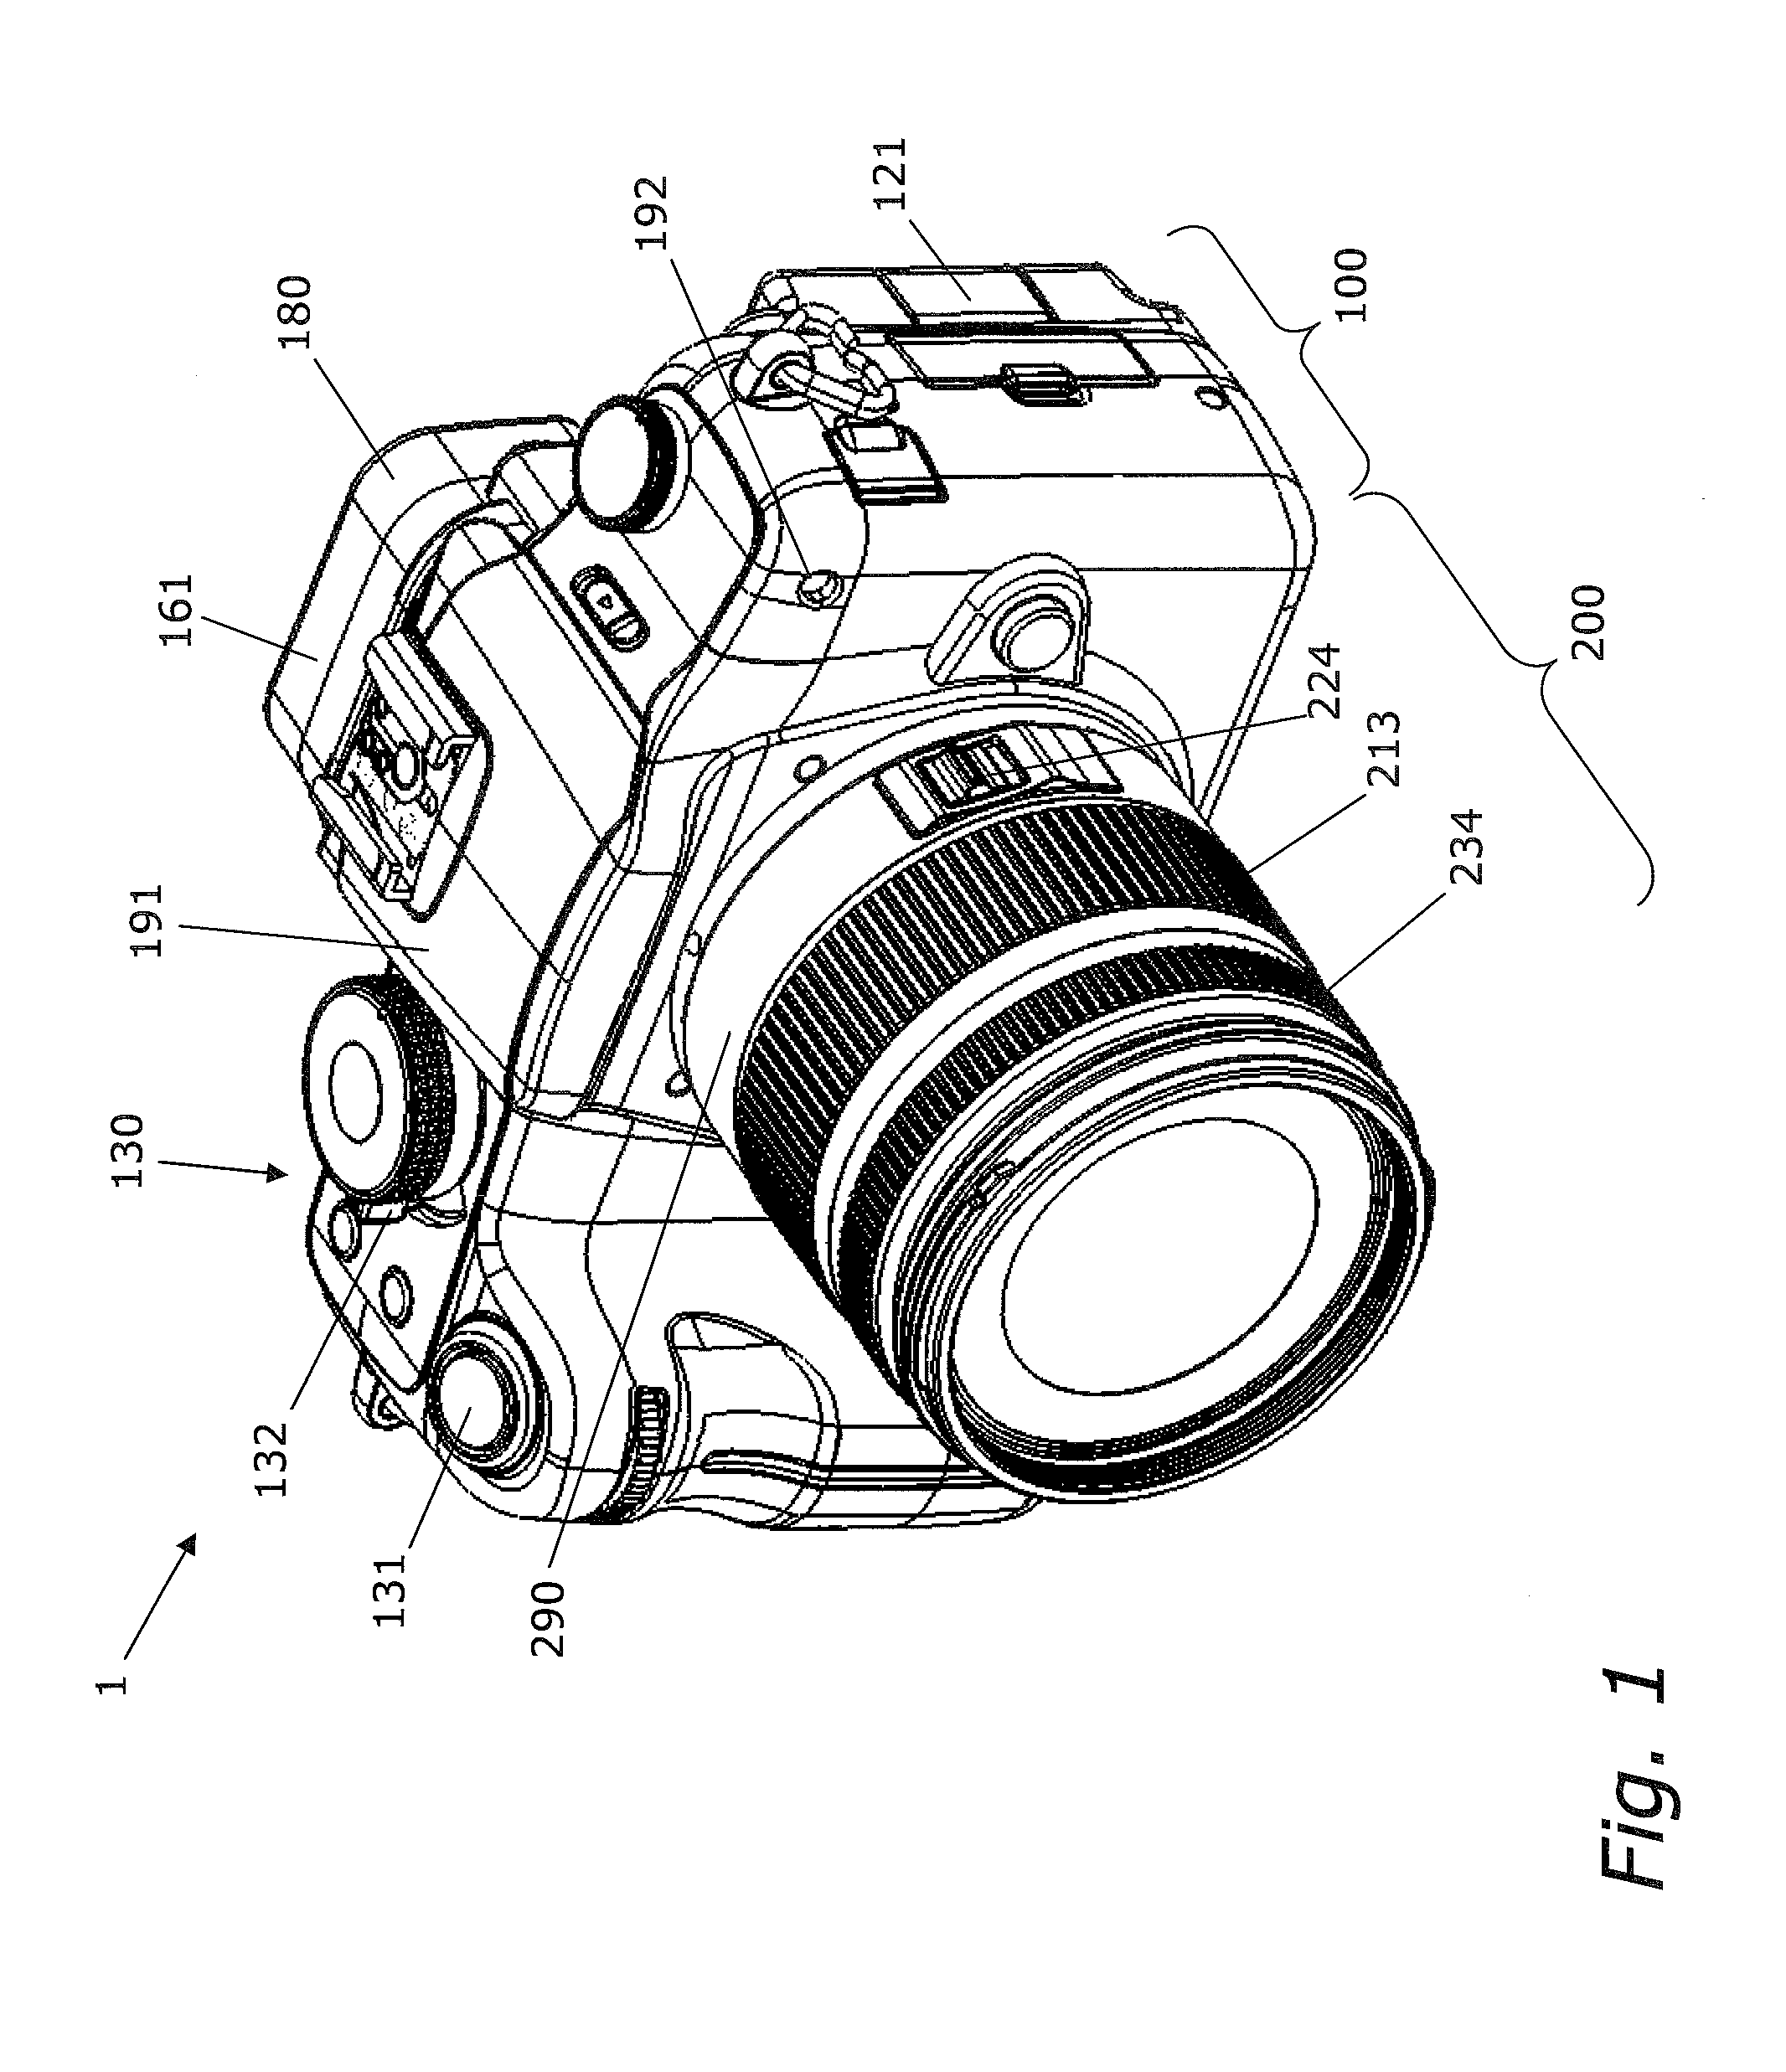 Camera body